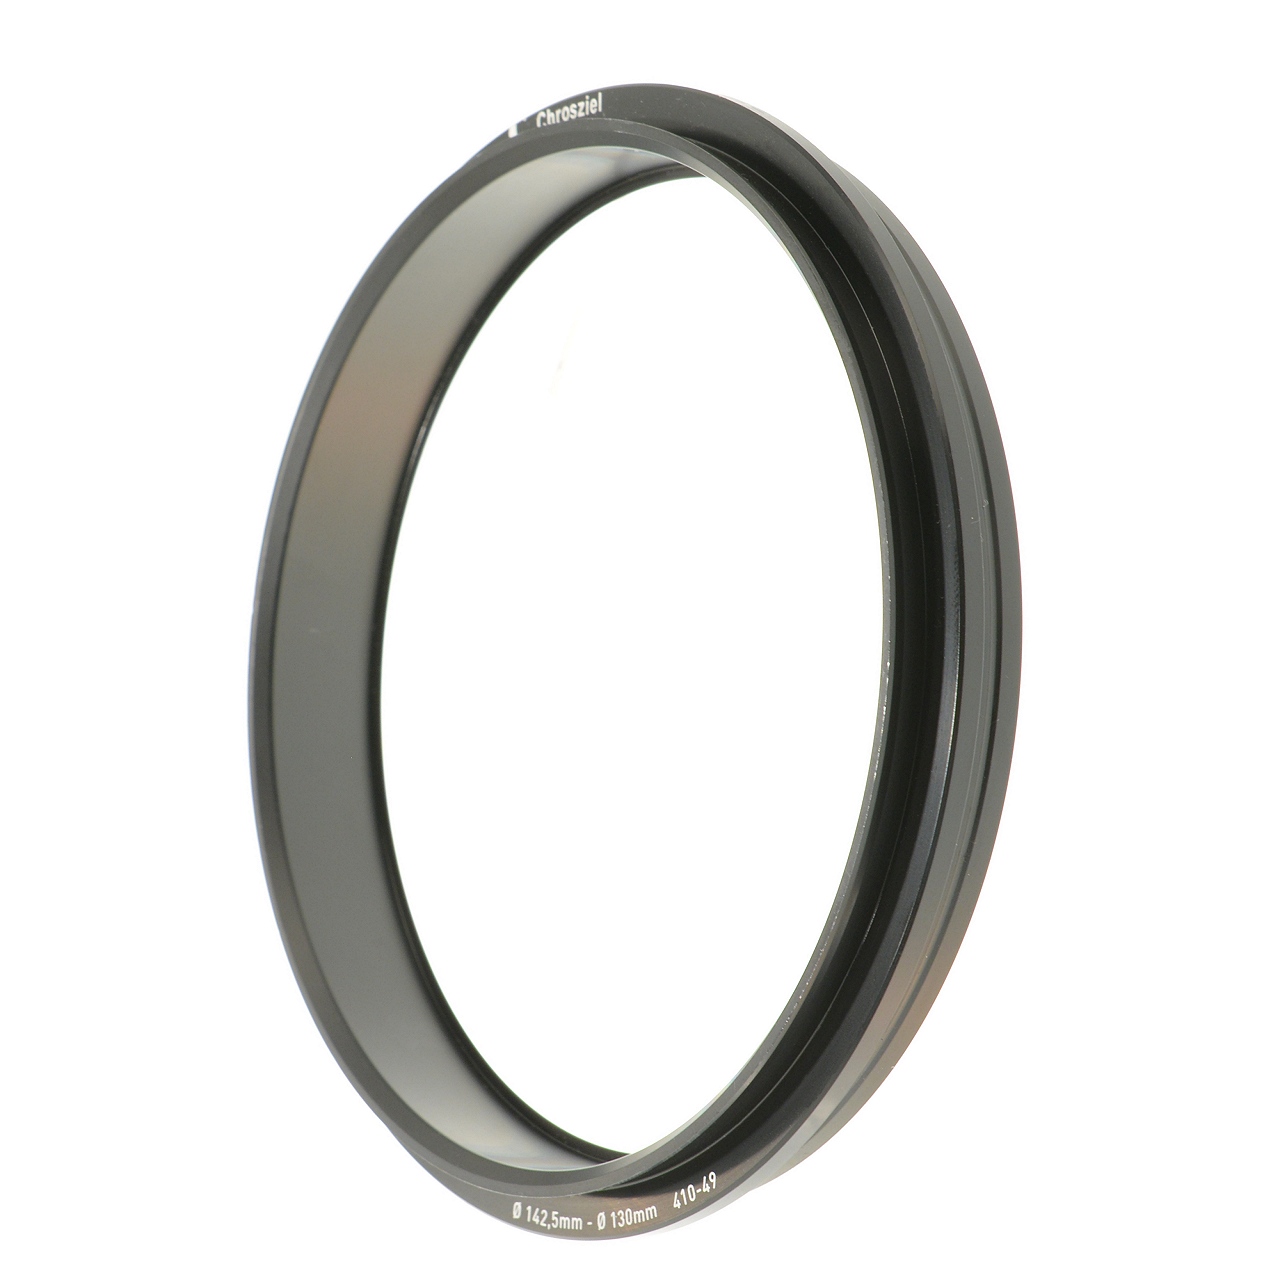 Retaining Ring Ø 142,5:130 mm